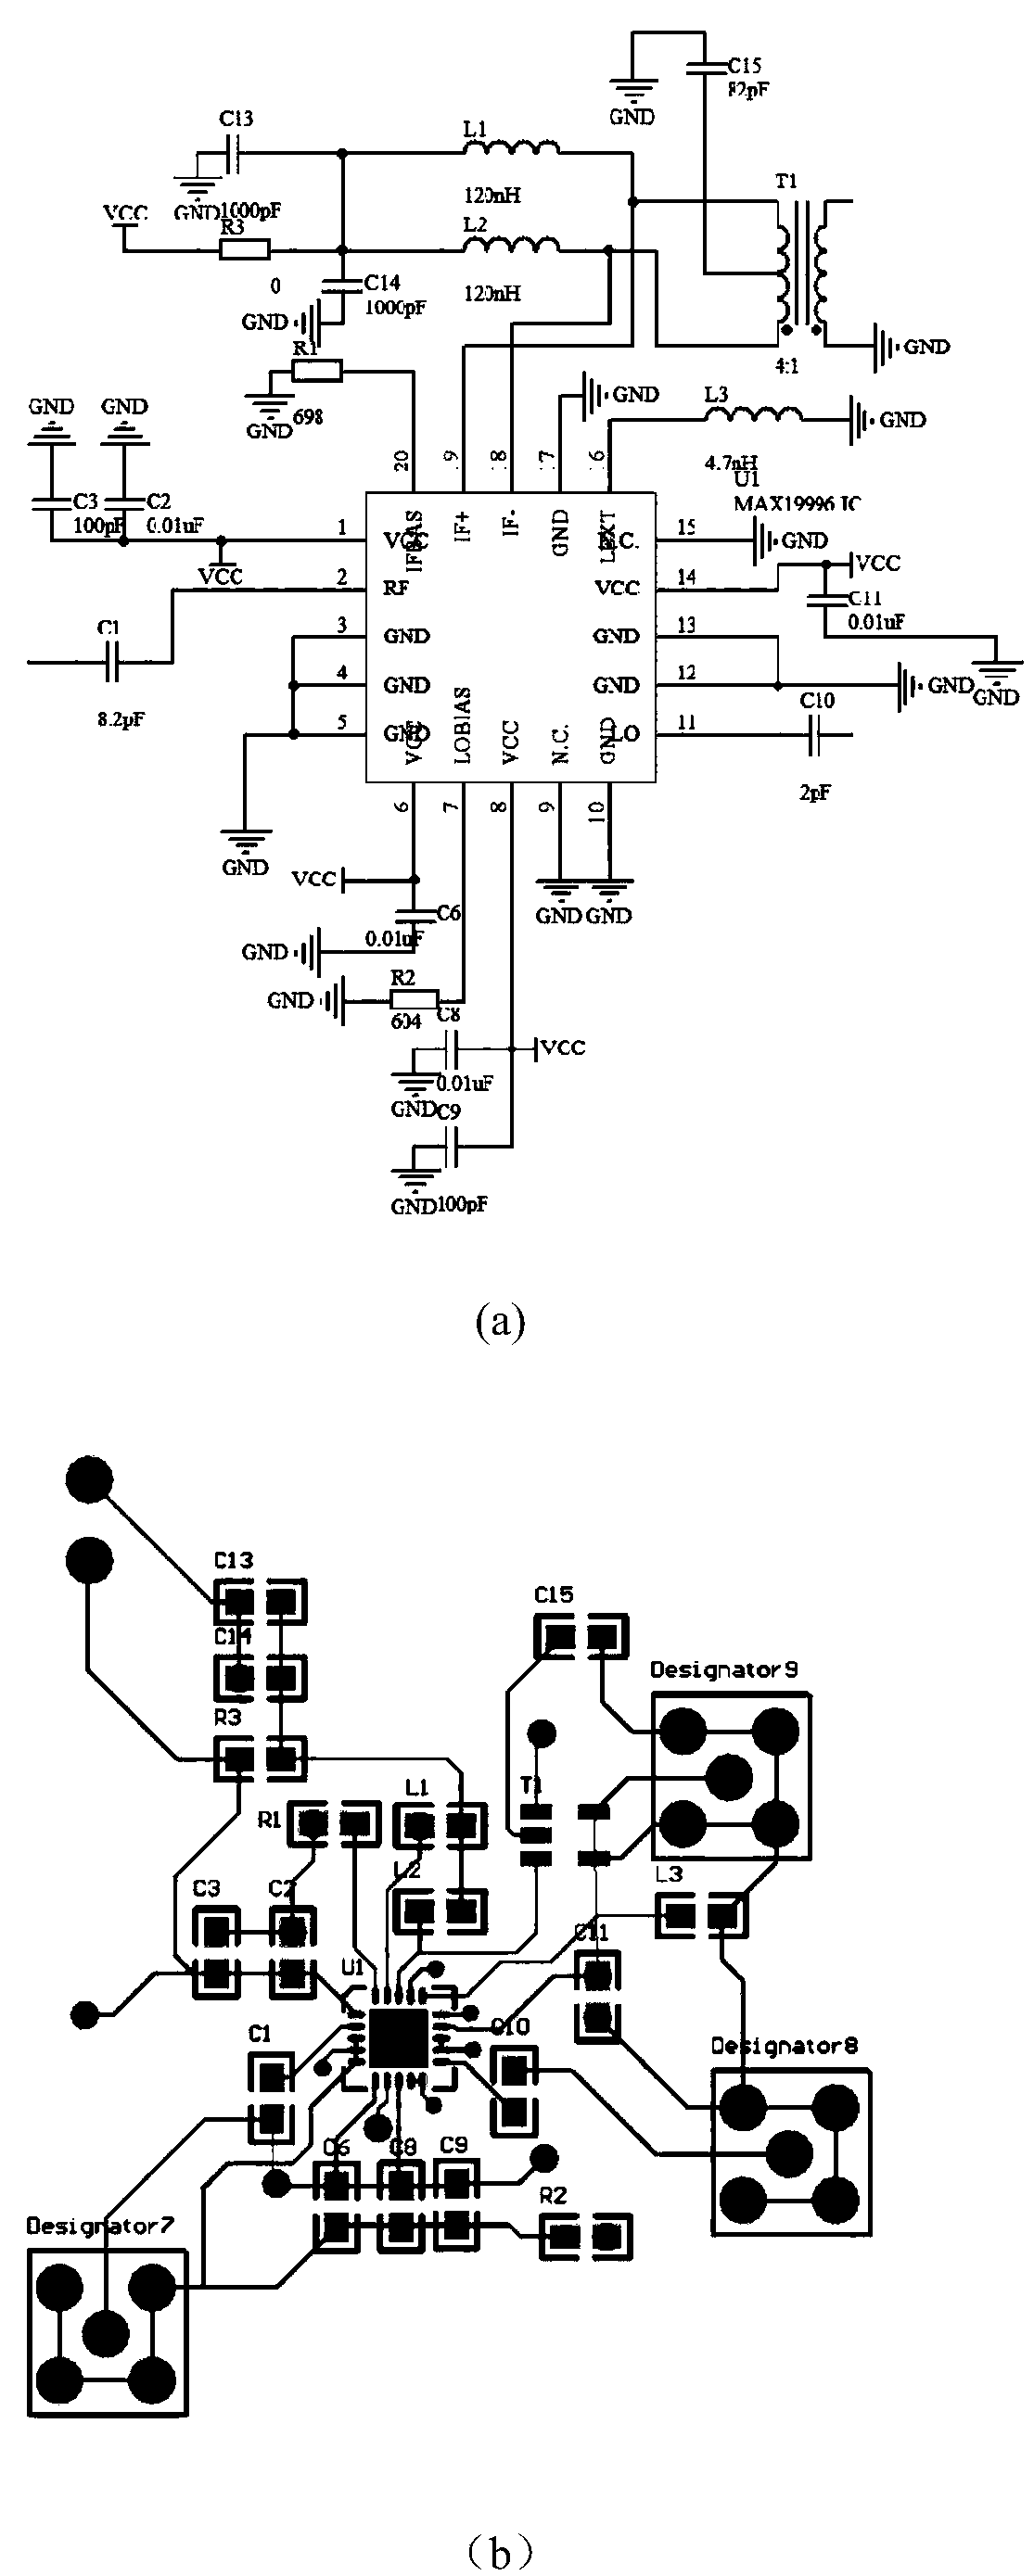 Linear frequency modulation radar signal processing method based on compressed sensing